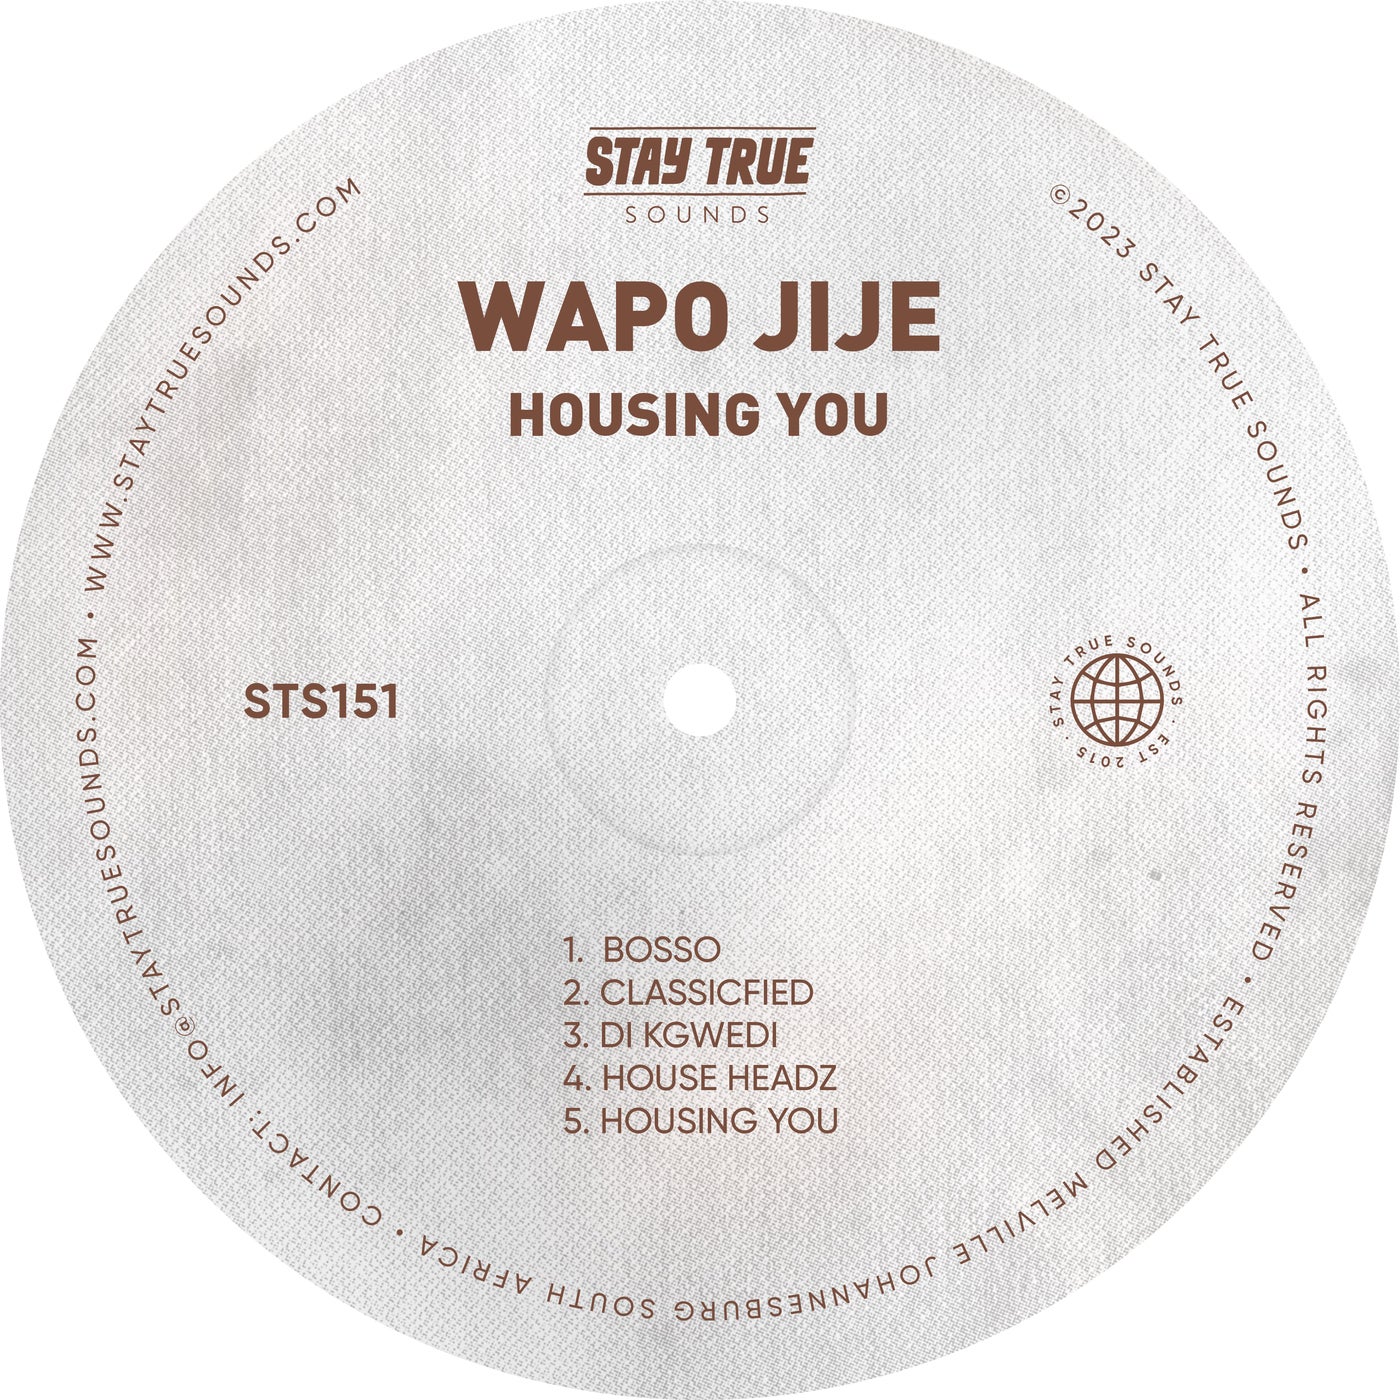 WAPO Jije - Housing You [Stay True Sounds]